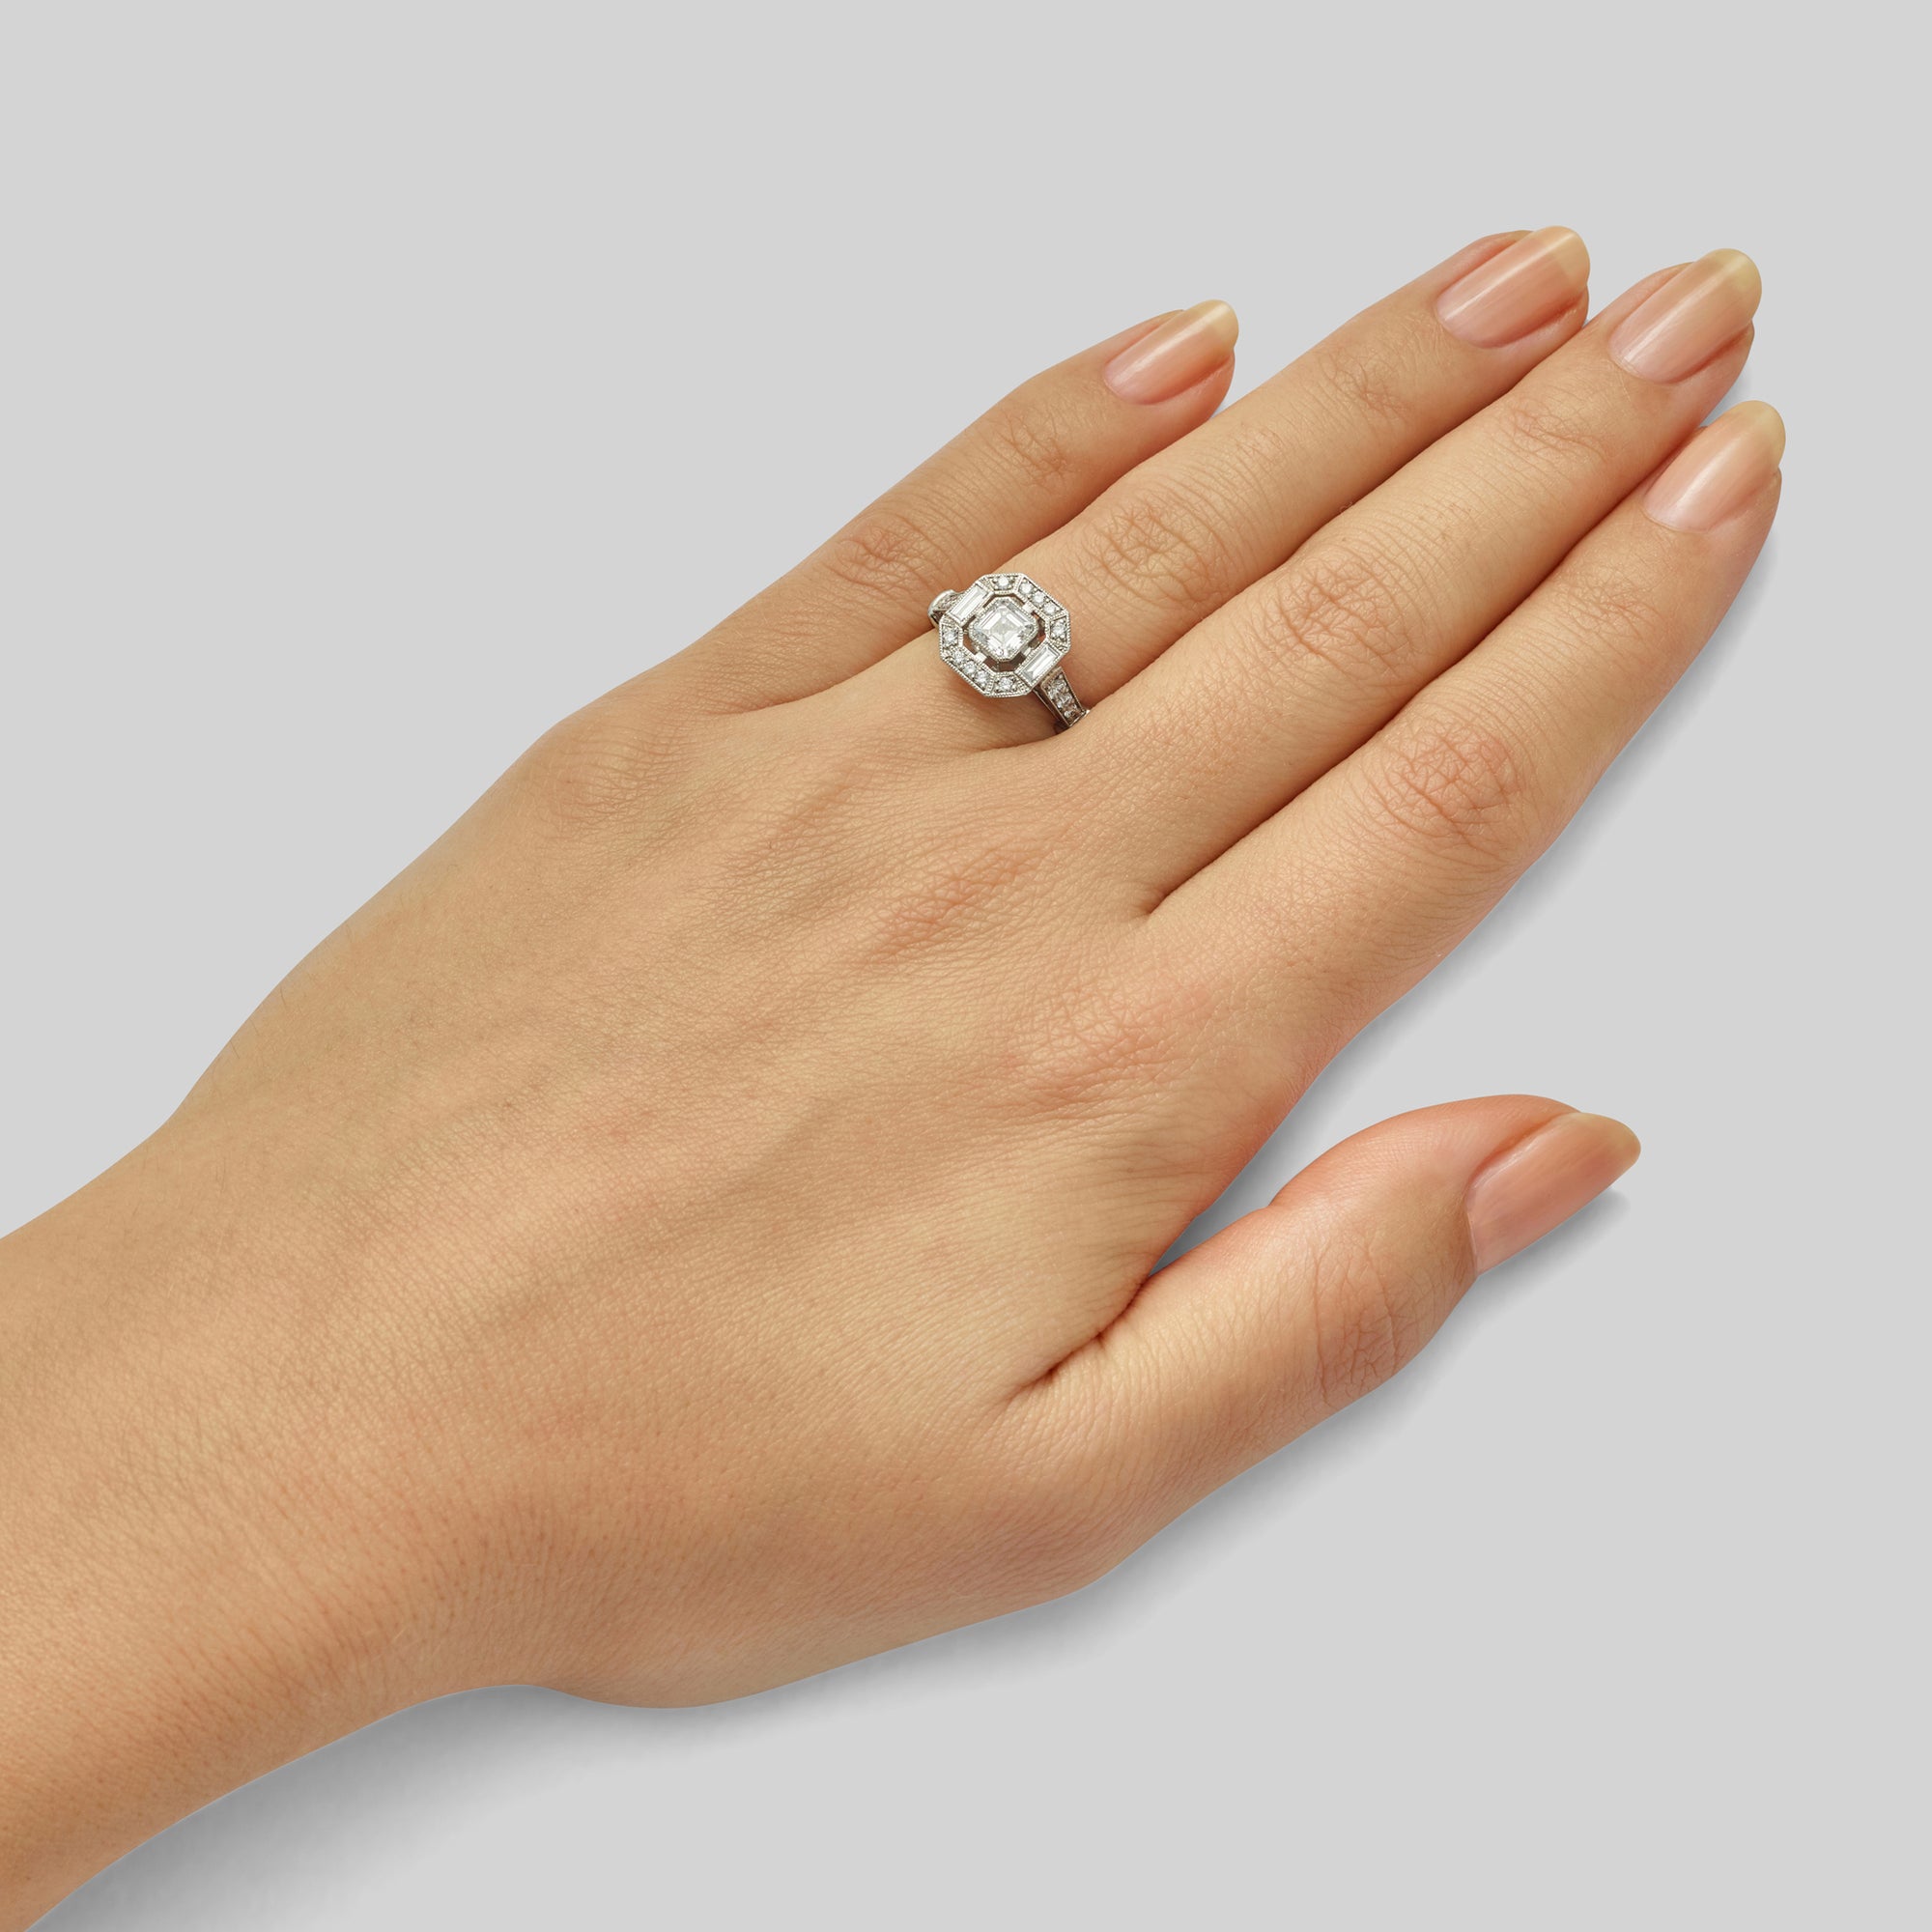 GIA Certified Art Deco Style Asscher Cut Diamond Ring at Susannah Lovis  Jewellers